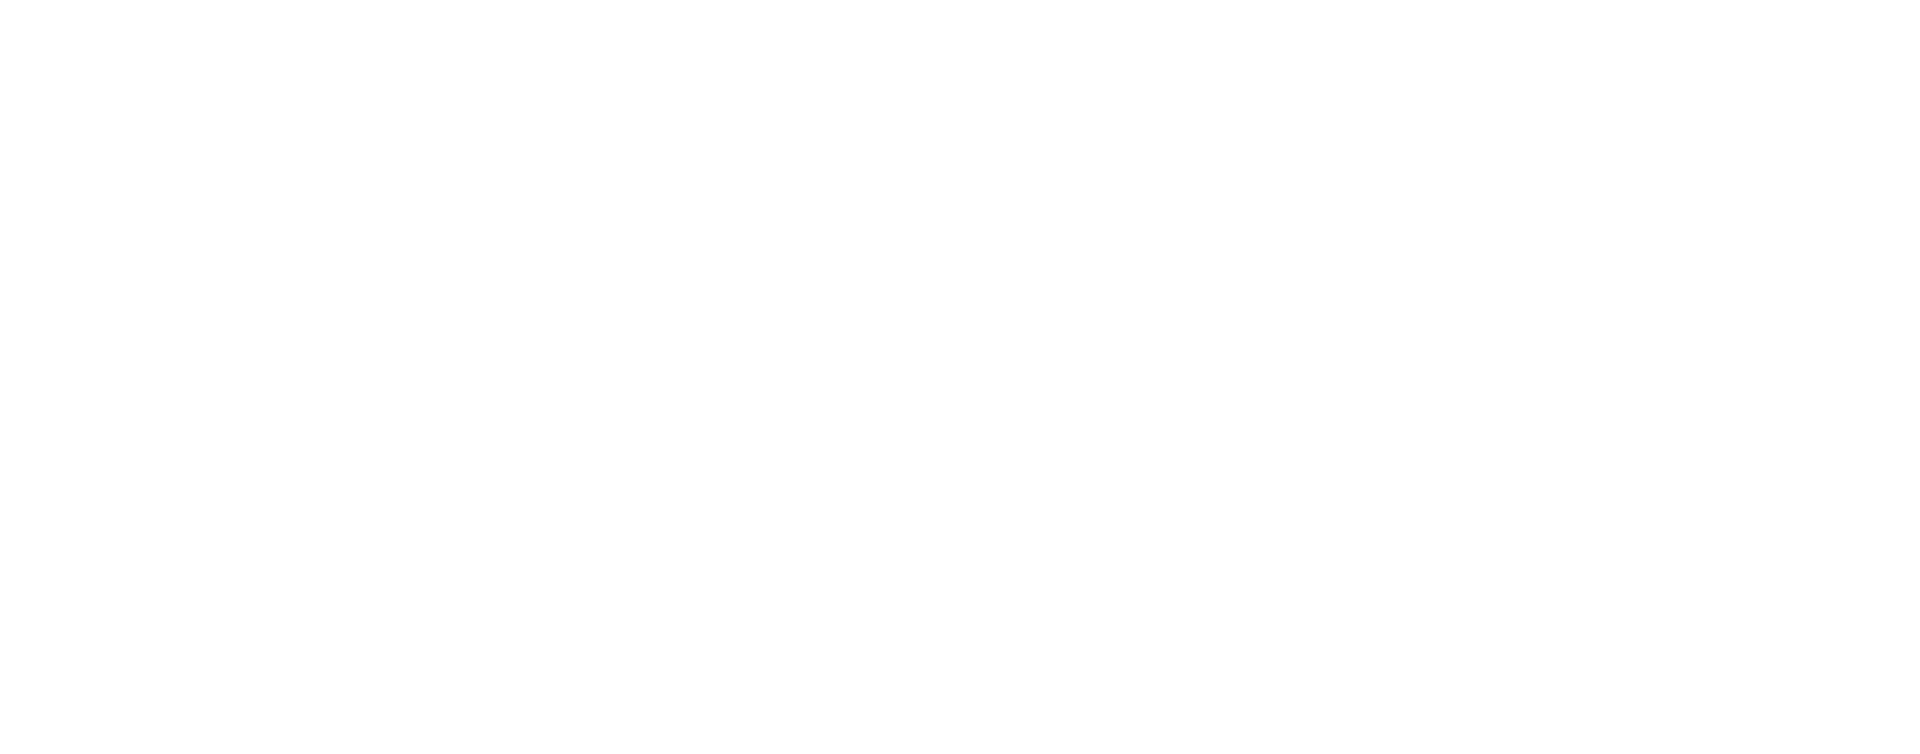 Austin Board of Realtors logo